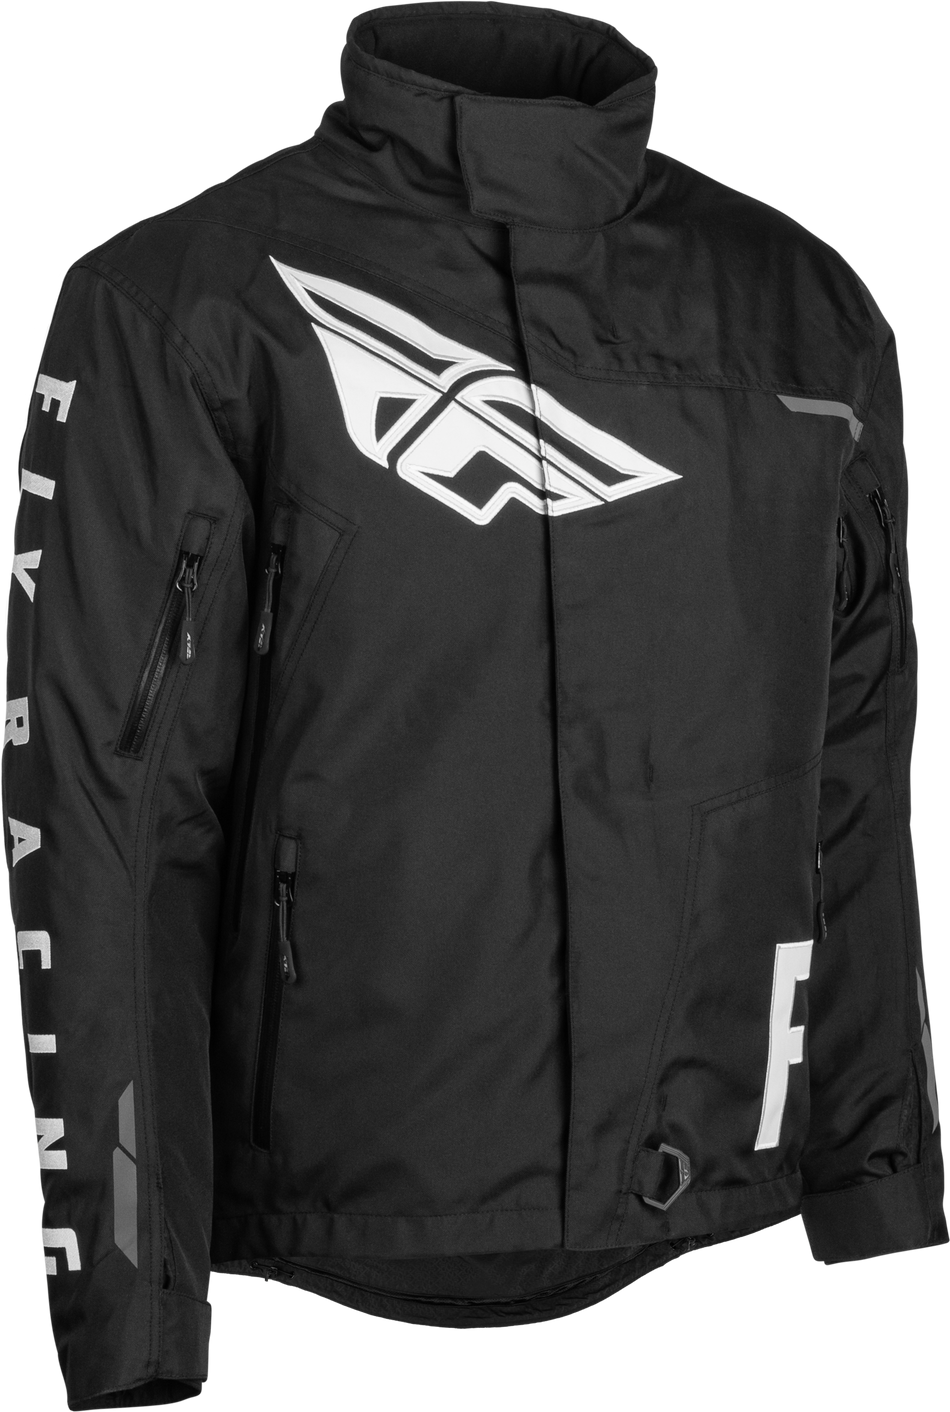 FLY RACING Snx Pro Jacket Black Xl 470-4115X